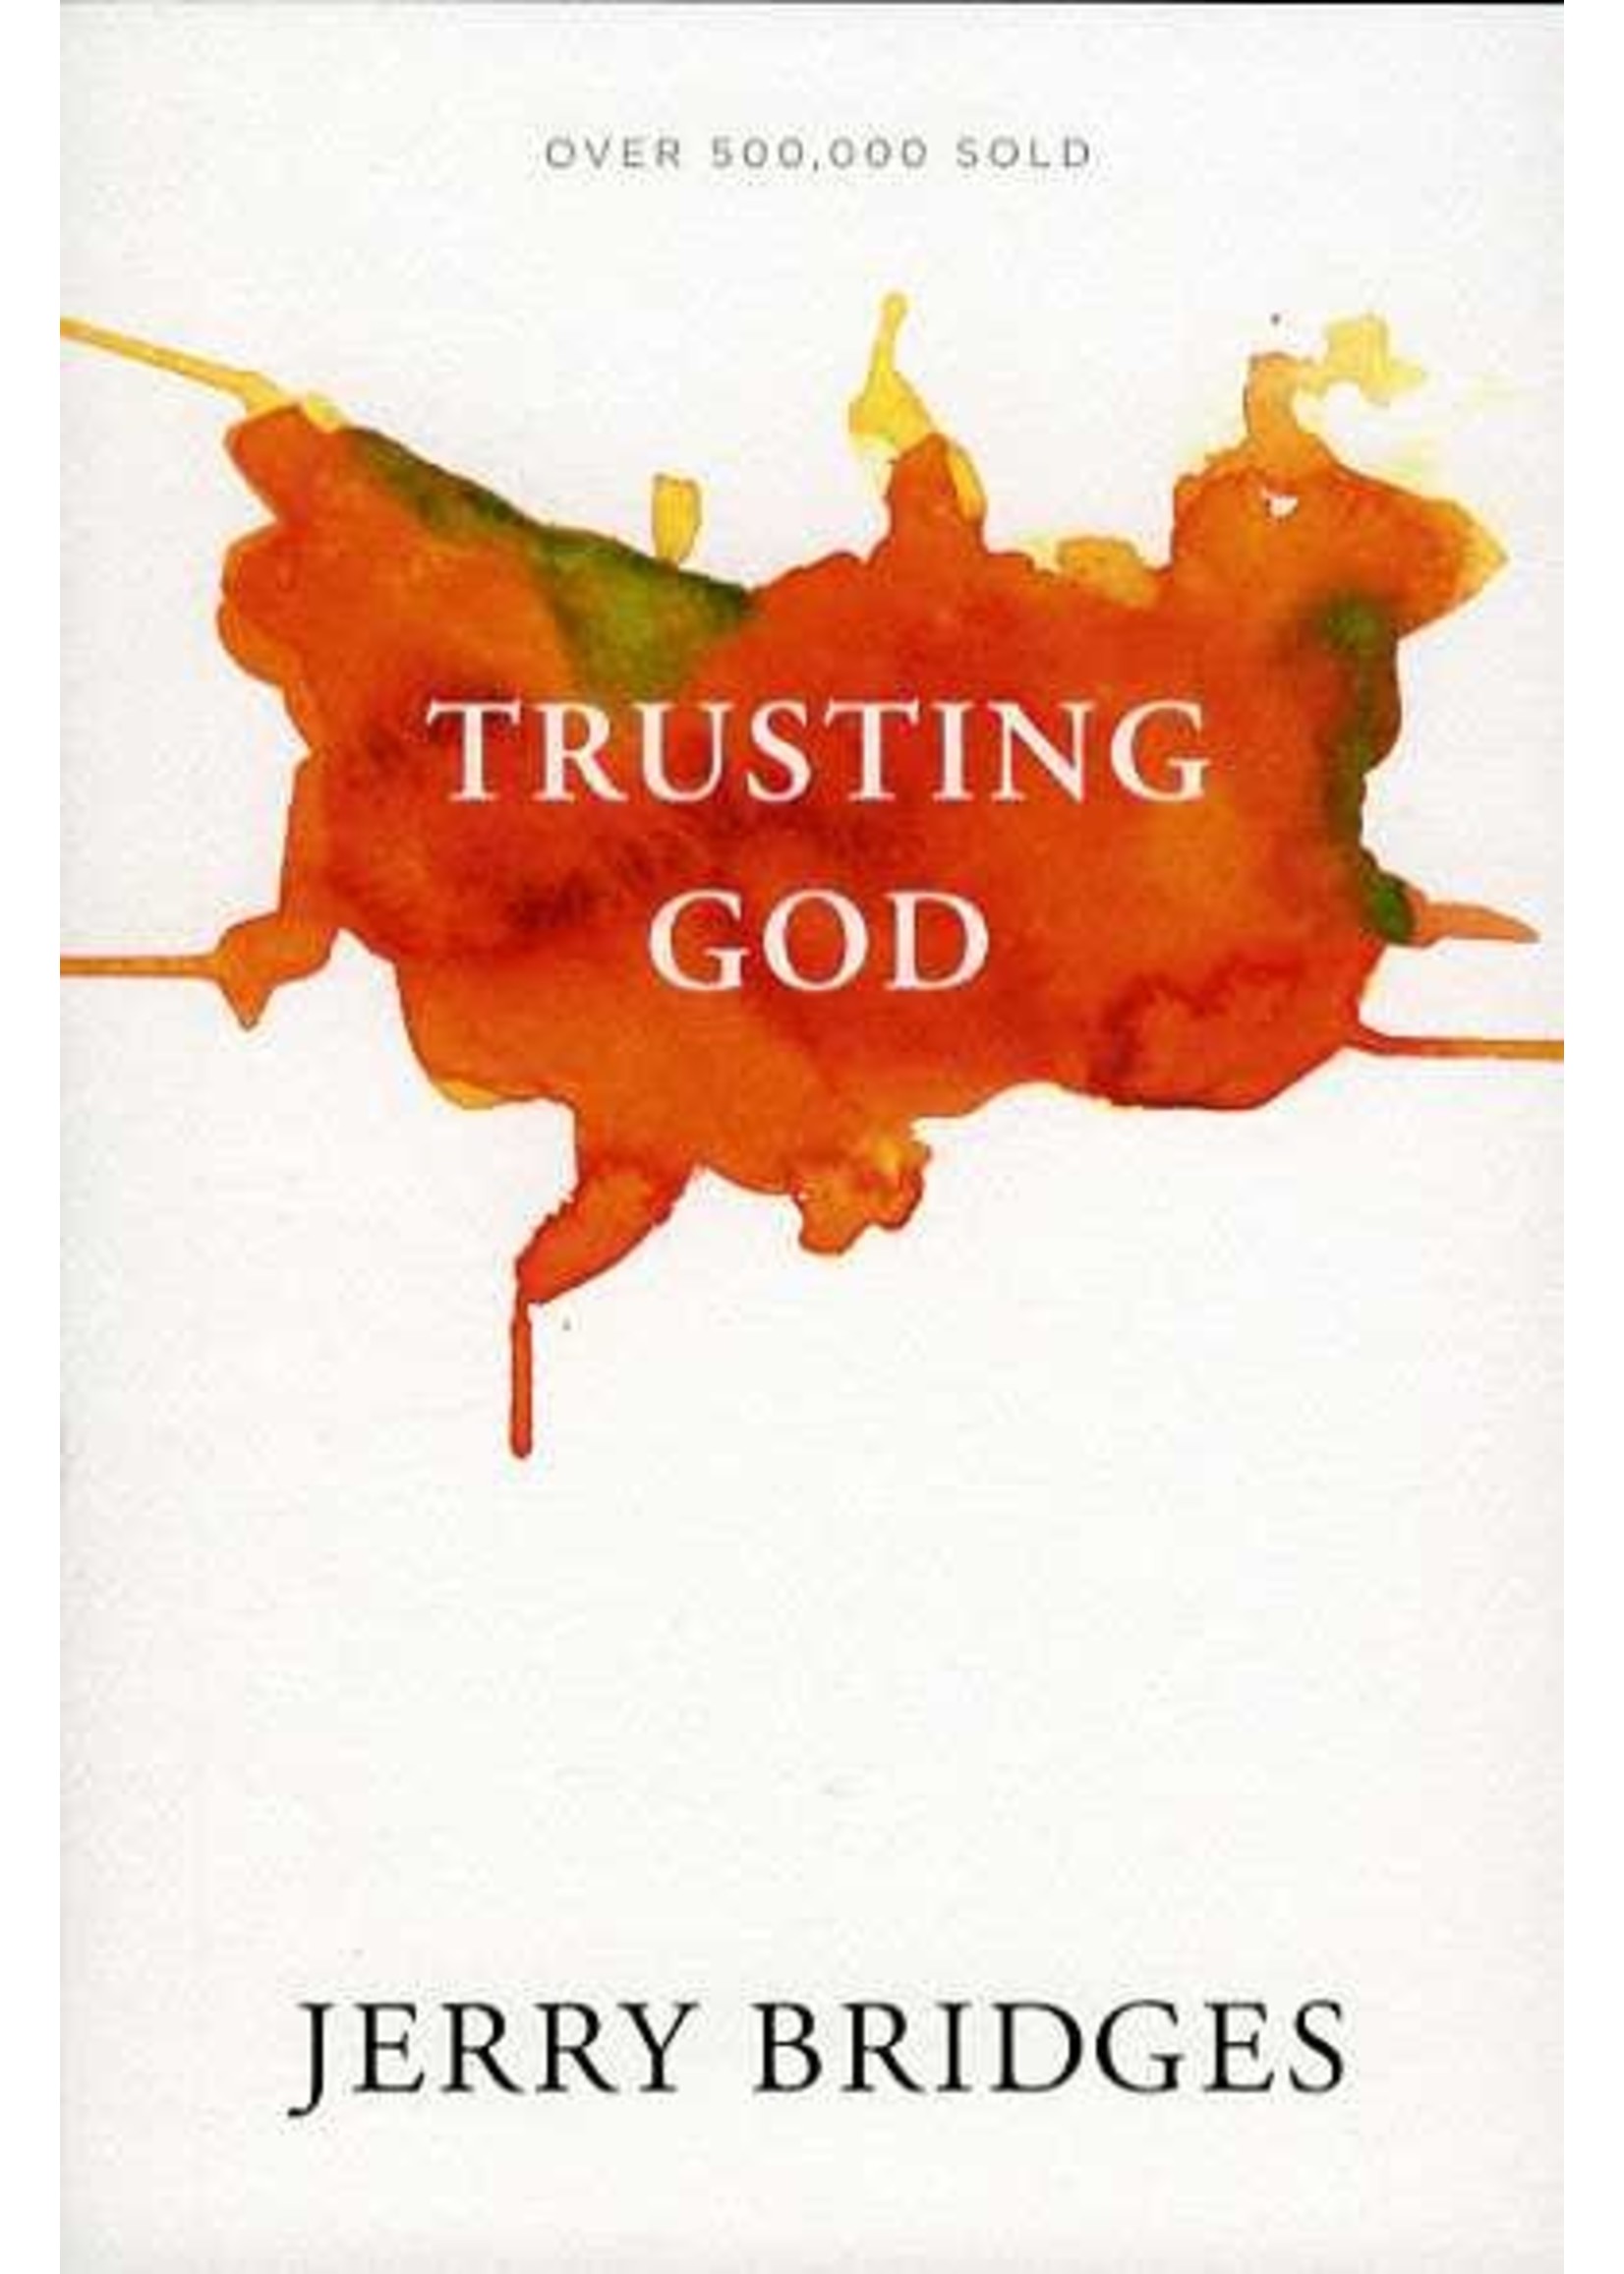 Tyndale Trusting God - Jerry Bridges